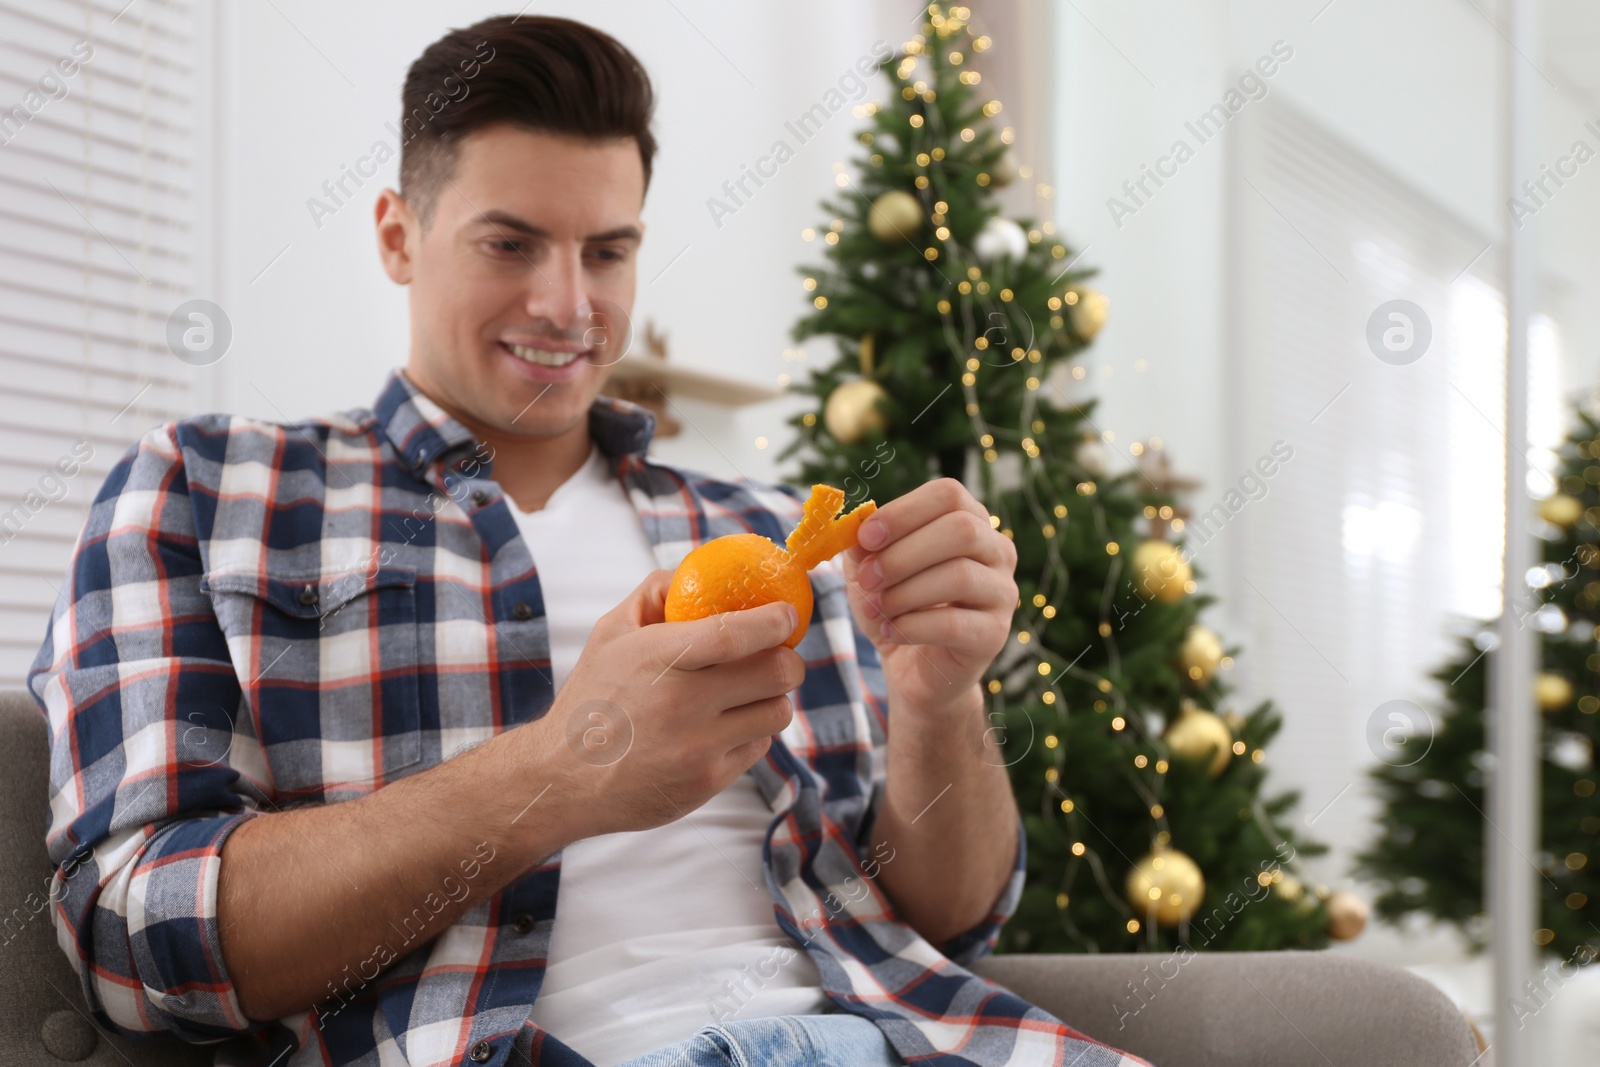 Photo of Happy man peeling tangerine near Christmas tree indoors